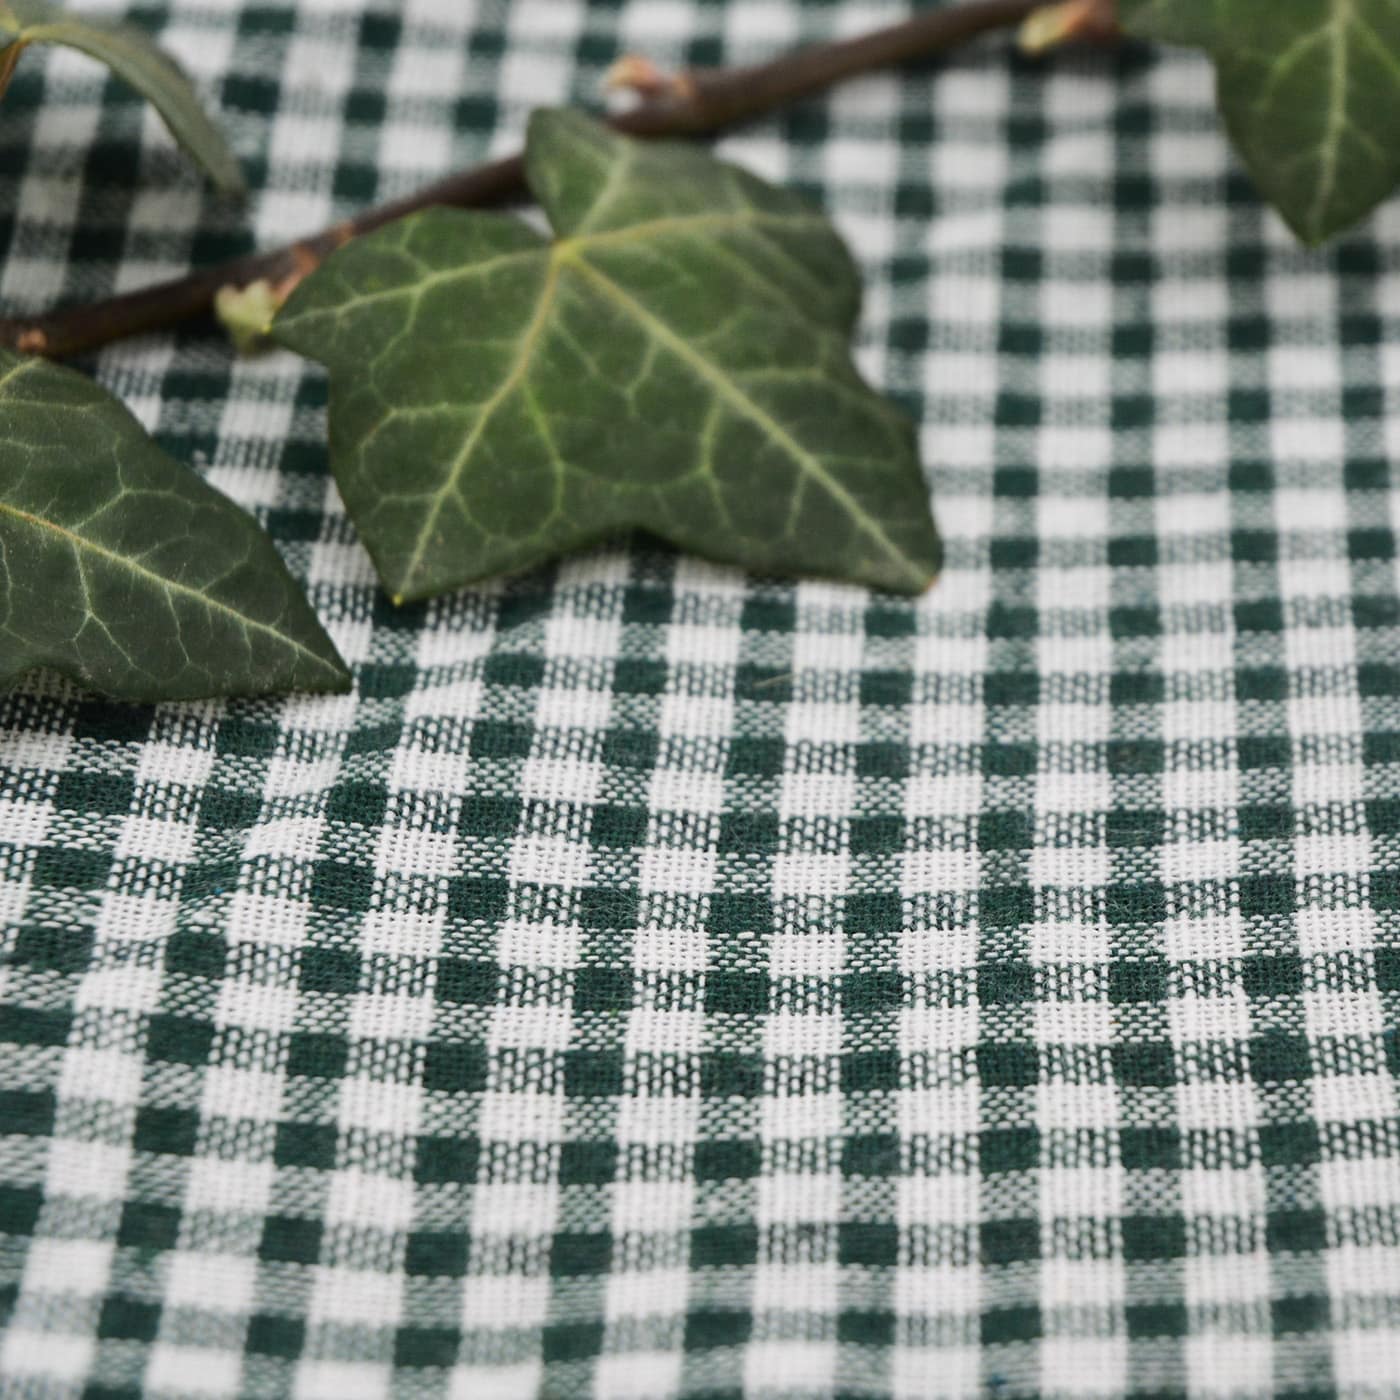 Waterproof picnic blanket dark green and white gingham XL